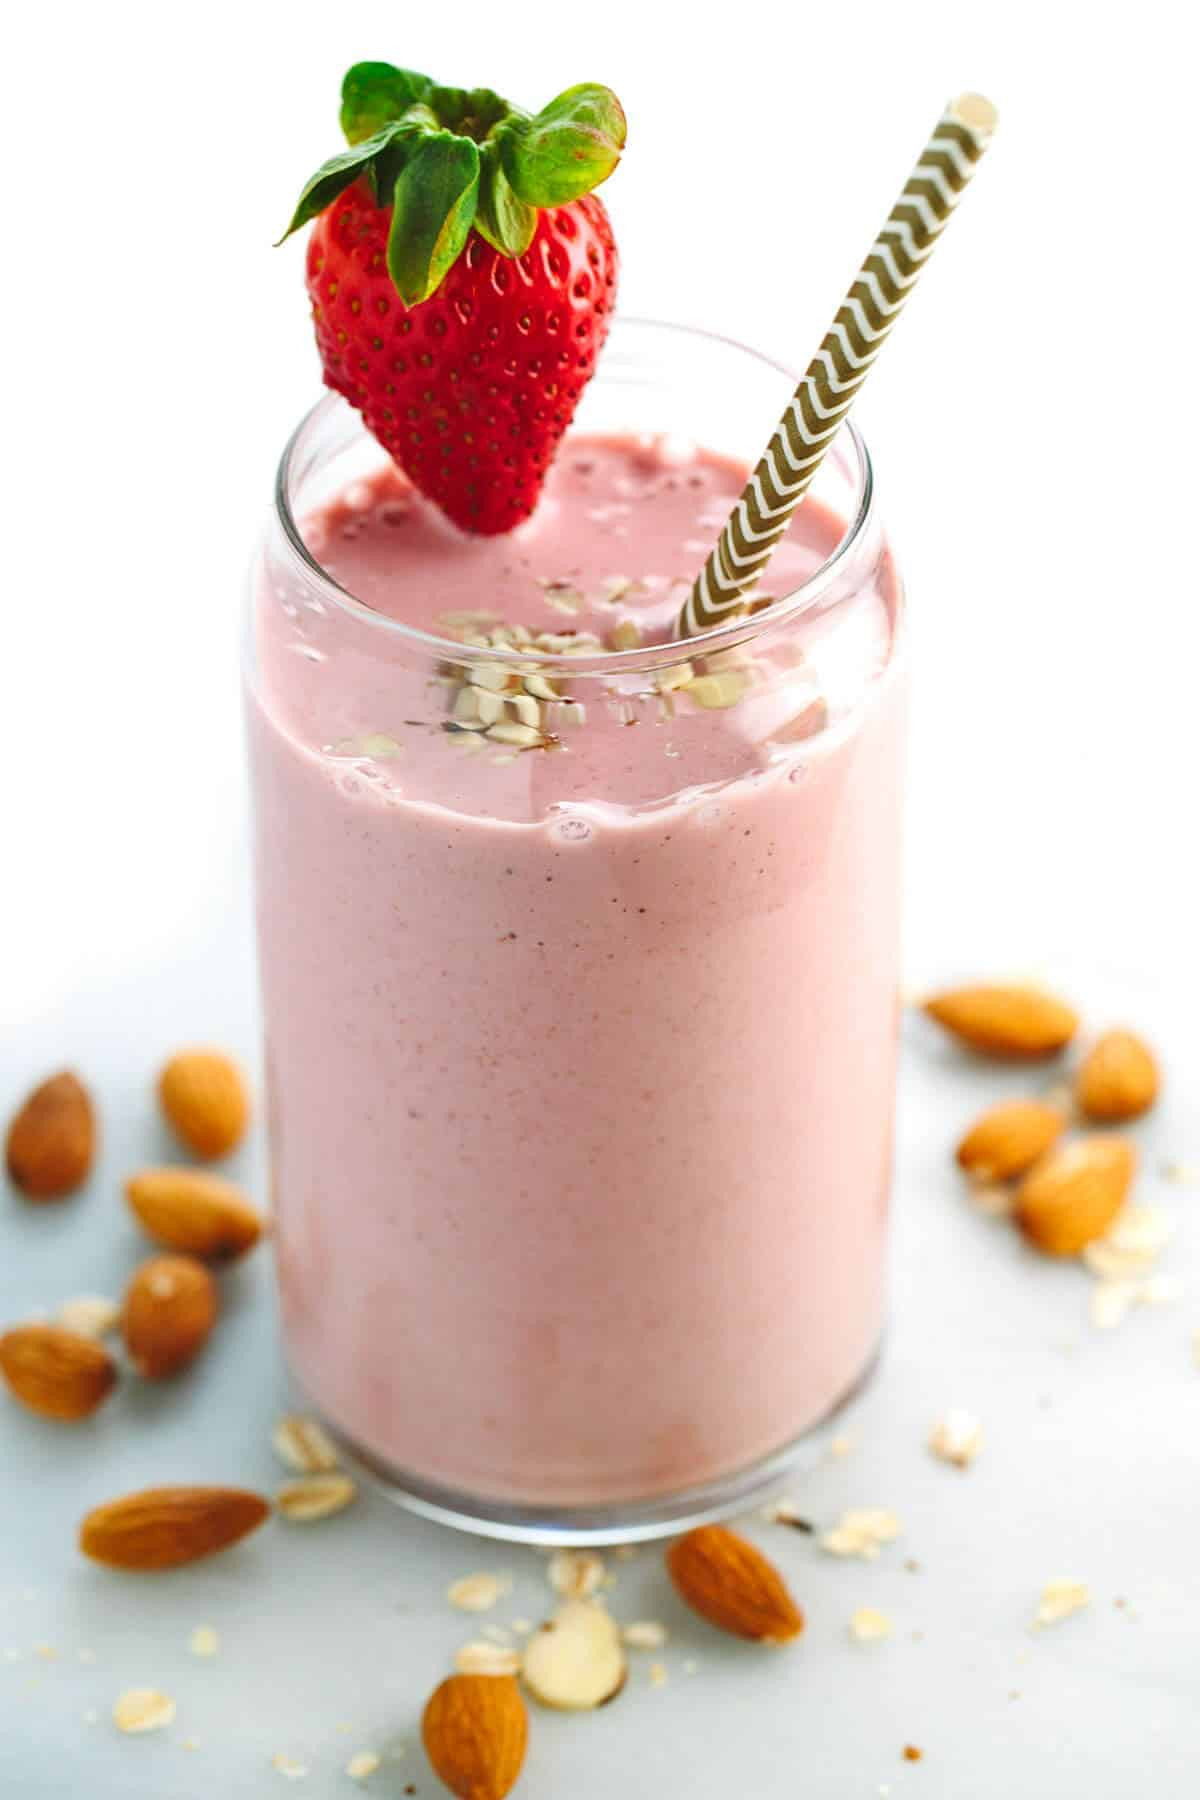 Yogurt Fruit Smoothies Recipes
 Strawberry Banana Smoothie Recipe with Almond Milk